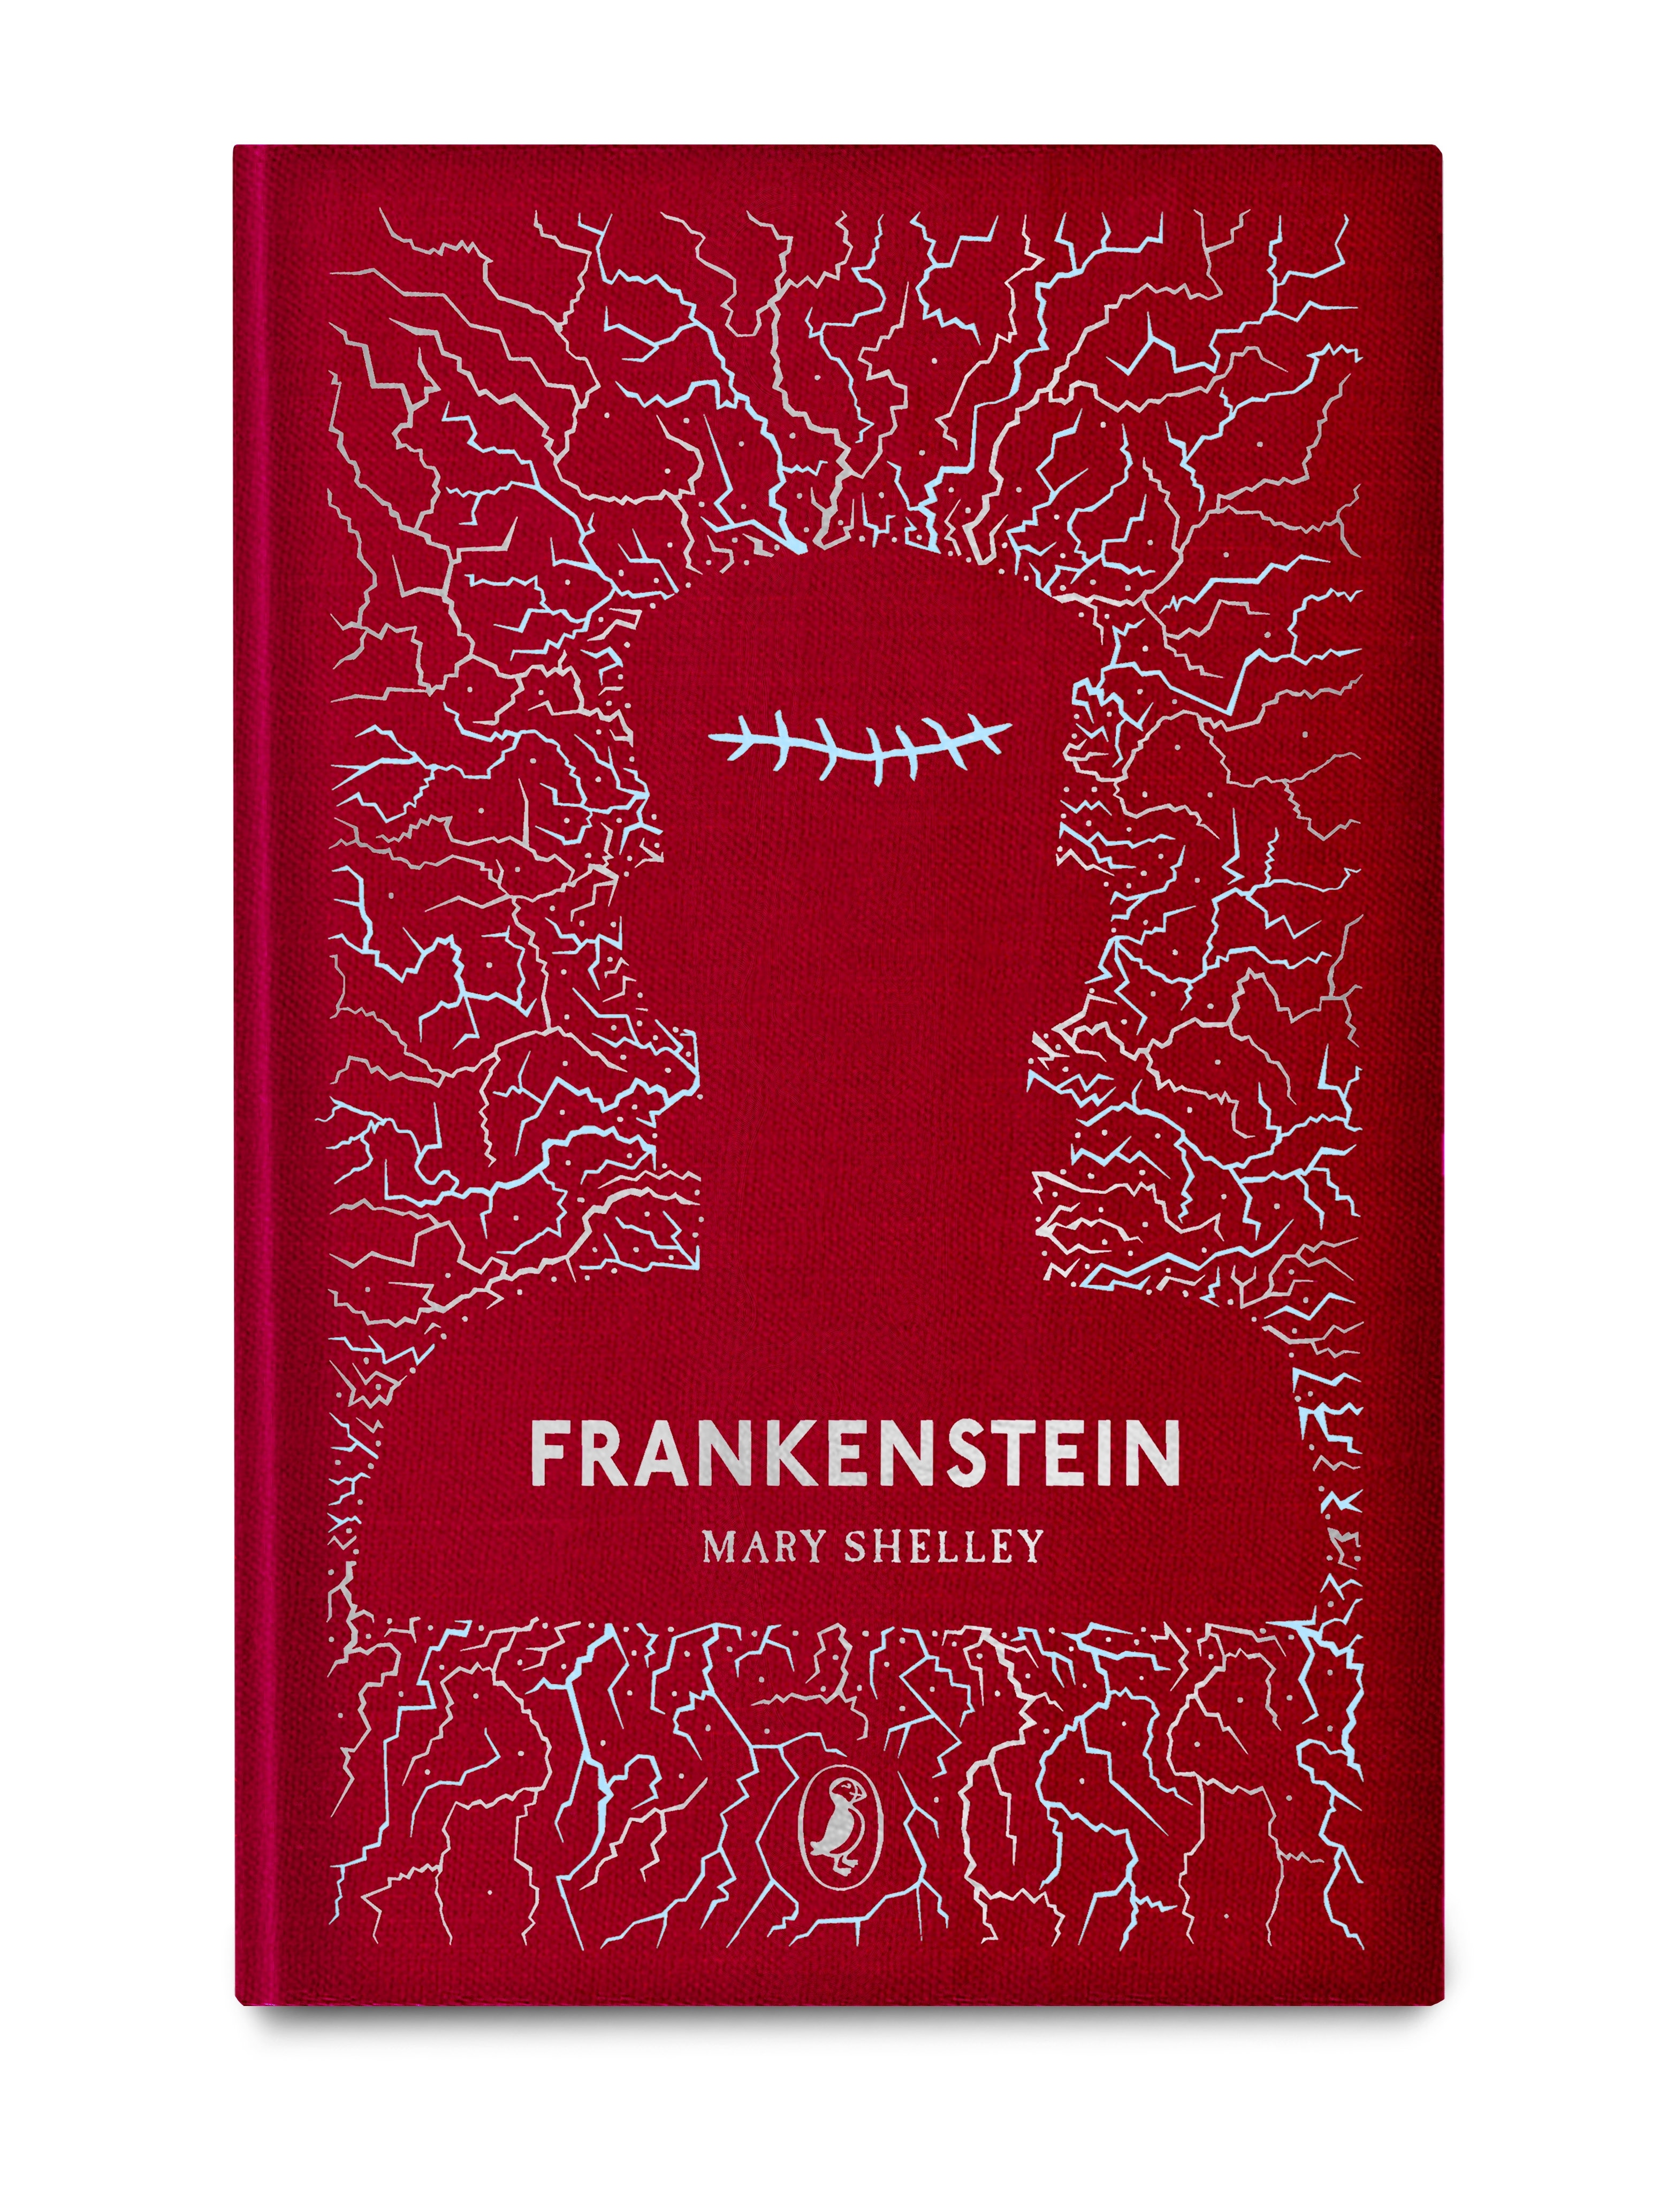 Book “Frankenstein” by Mary Shelley — September 3, 2020